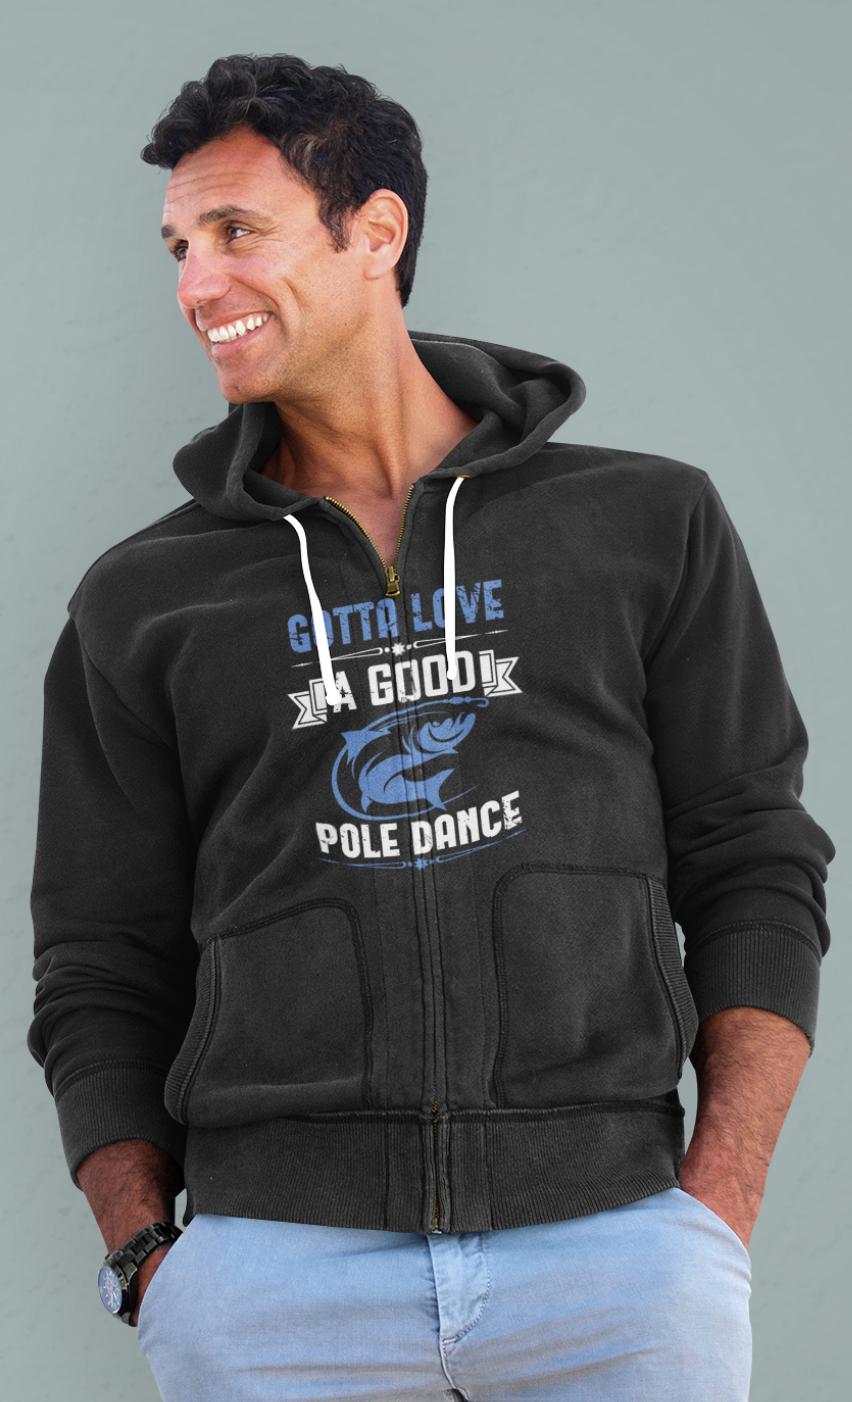 Good pole dance; Full-zip hoodie sweatshirt